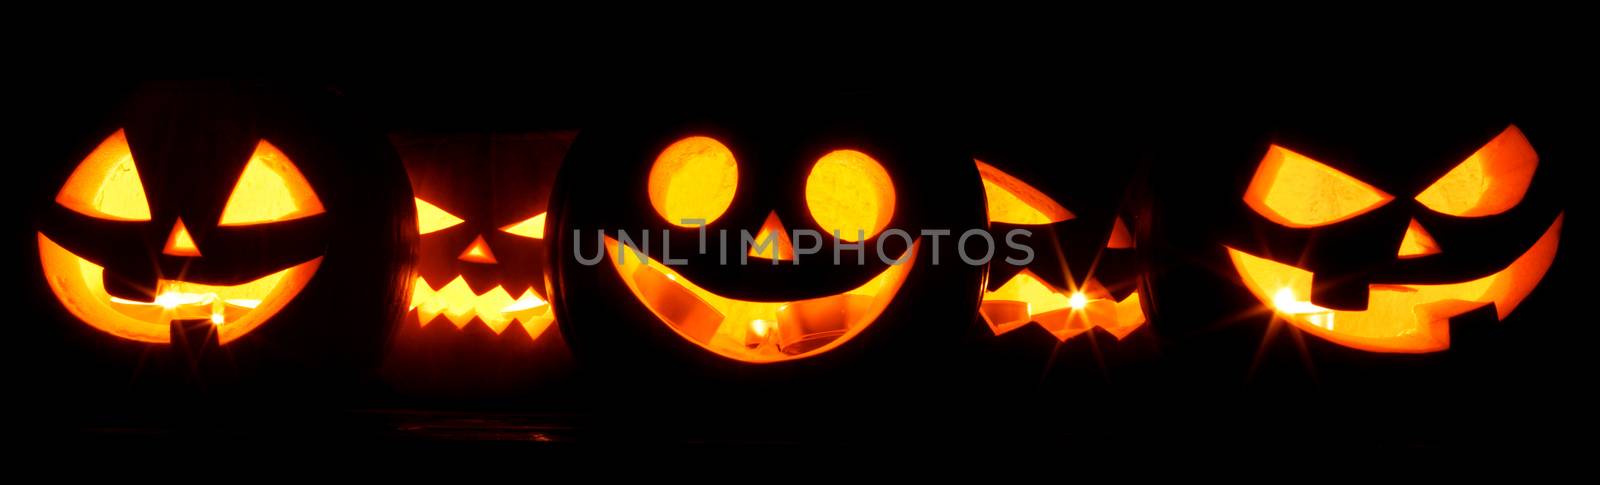 Halloween Pumpkins on black by Yellowj